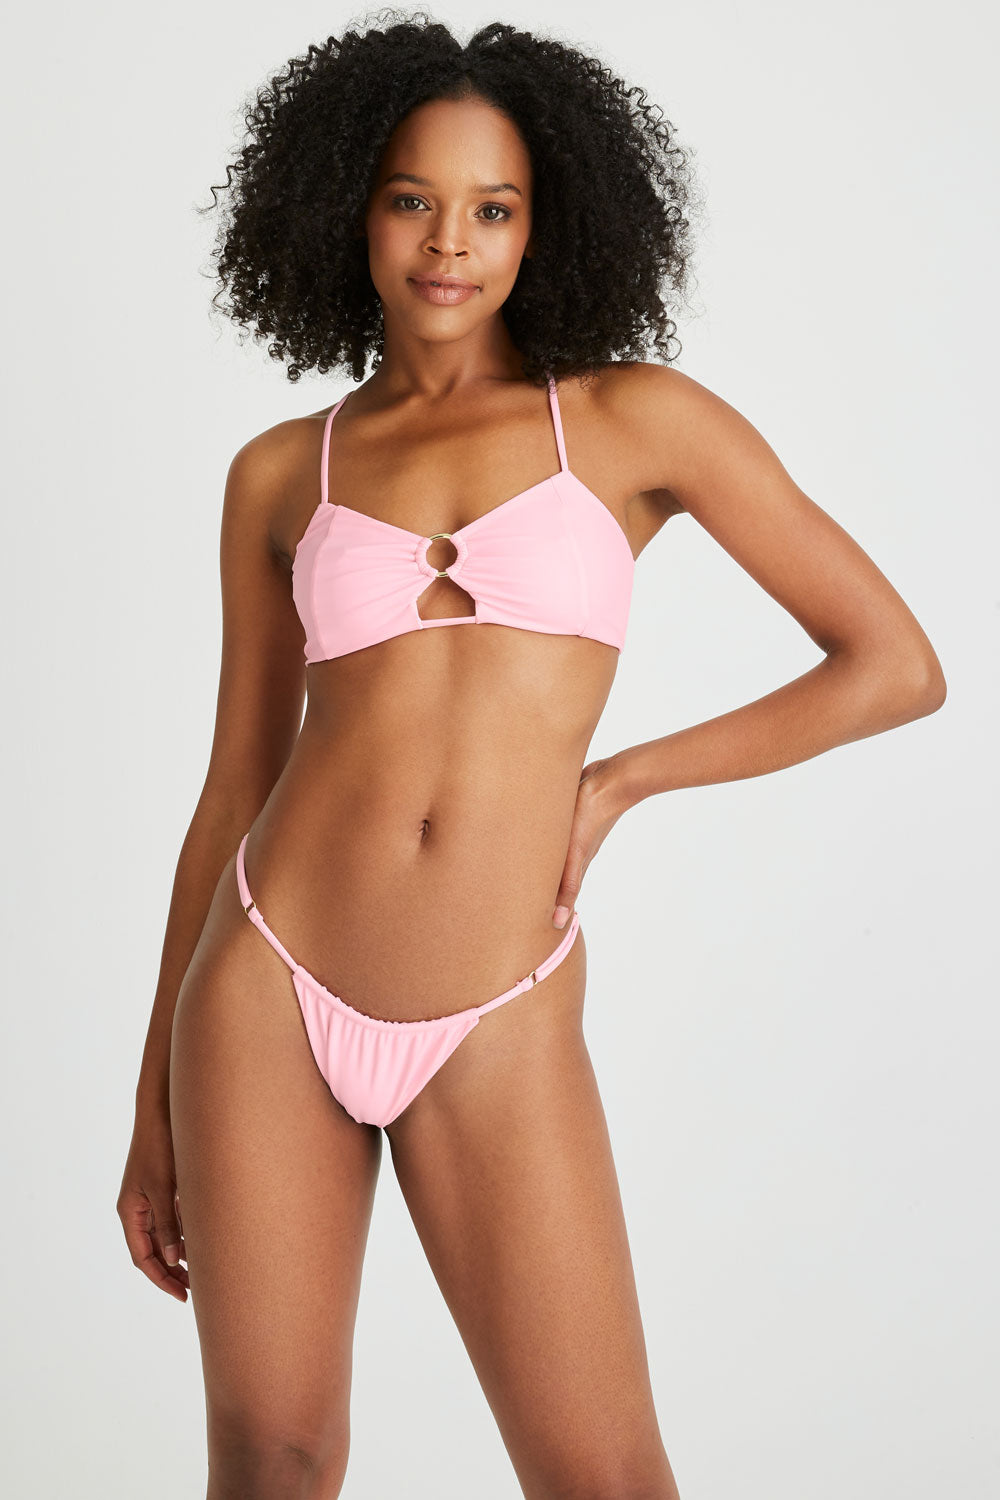 Bikini babe model wearing one of our pink bikini sets